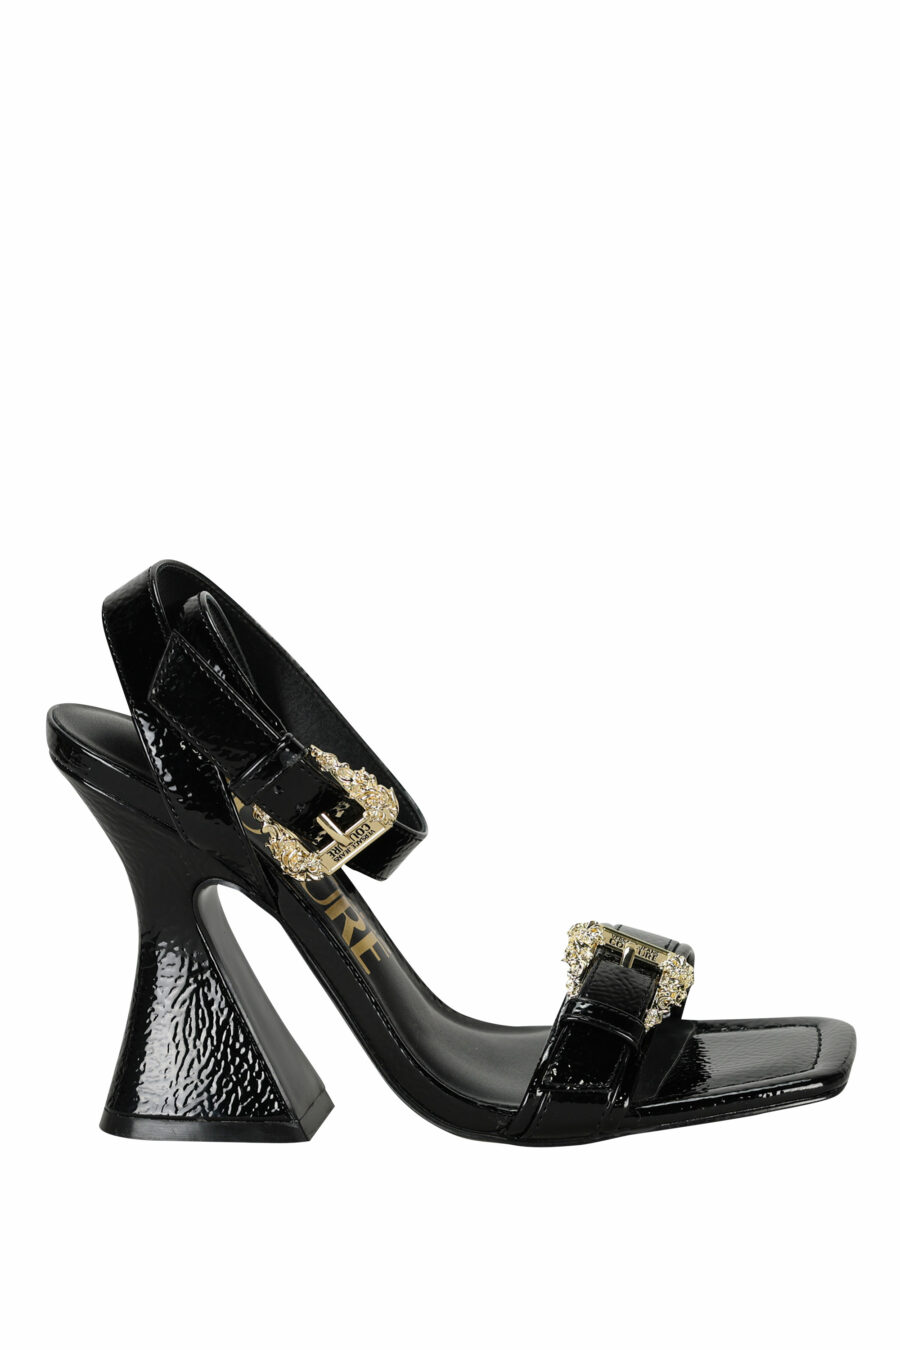 Black heels with gold baroque buckle - 8052019662979